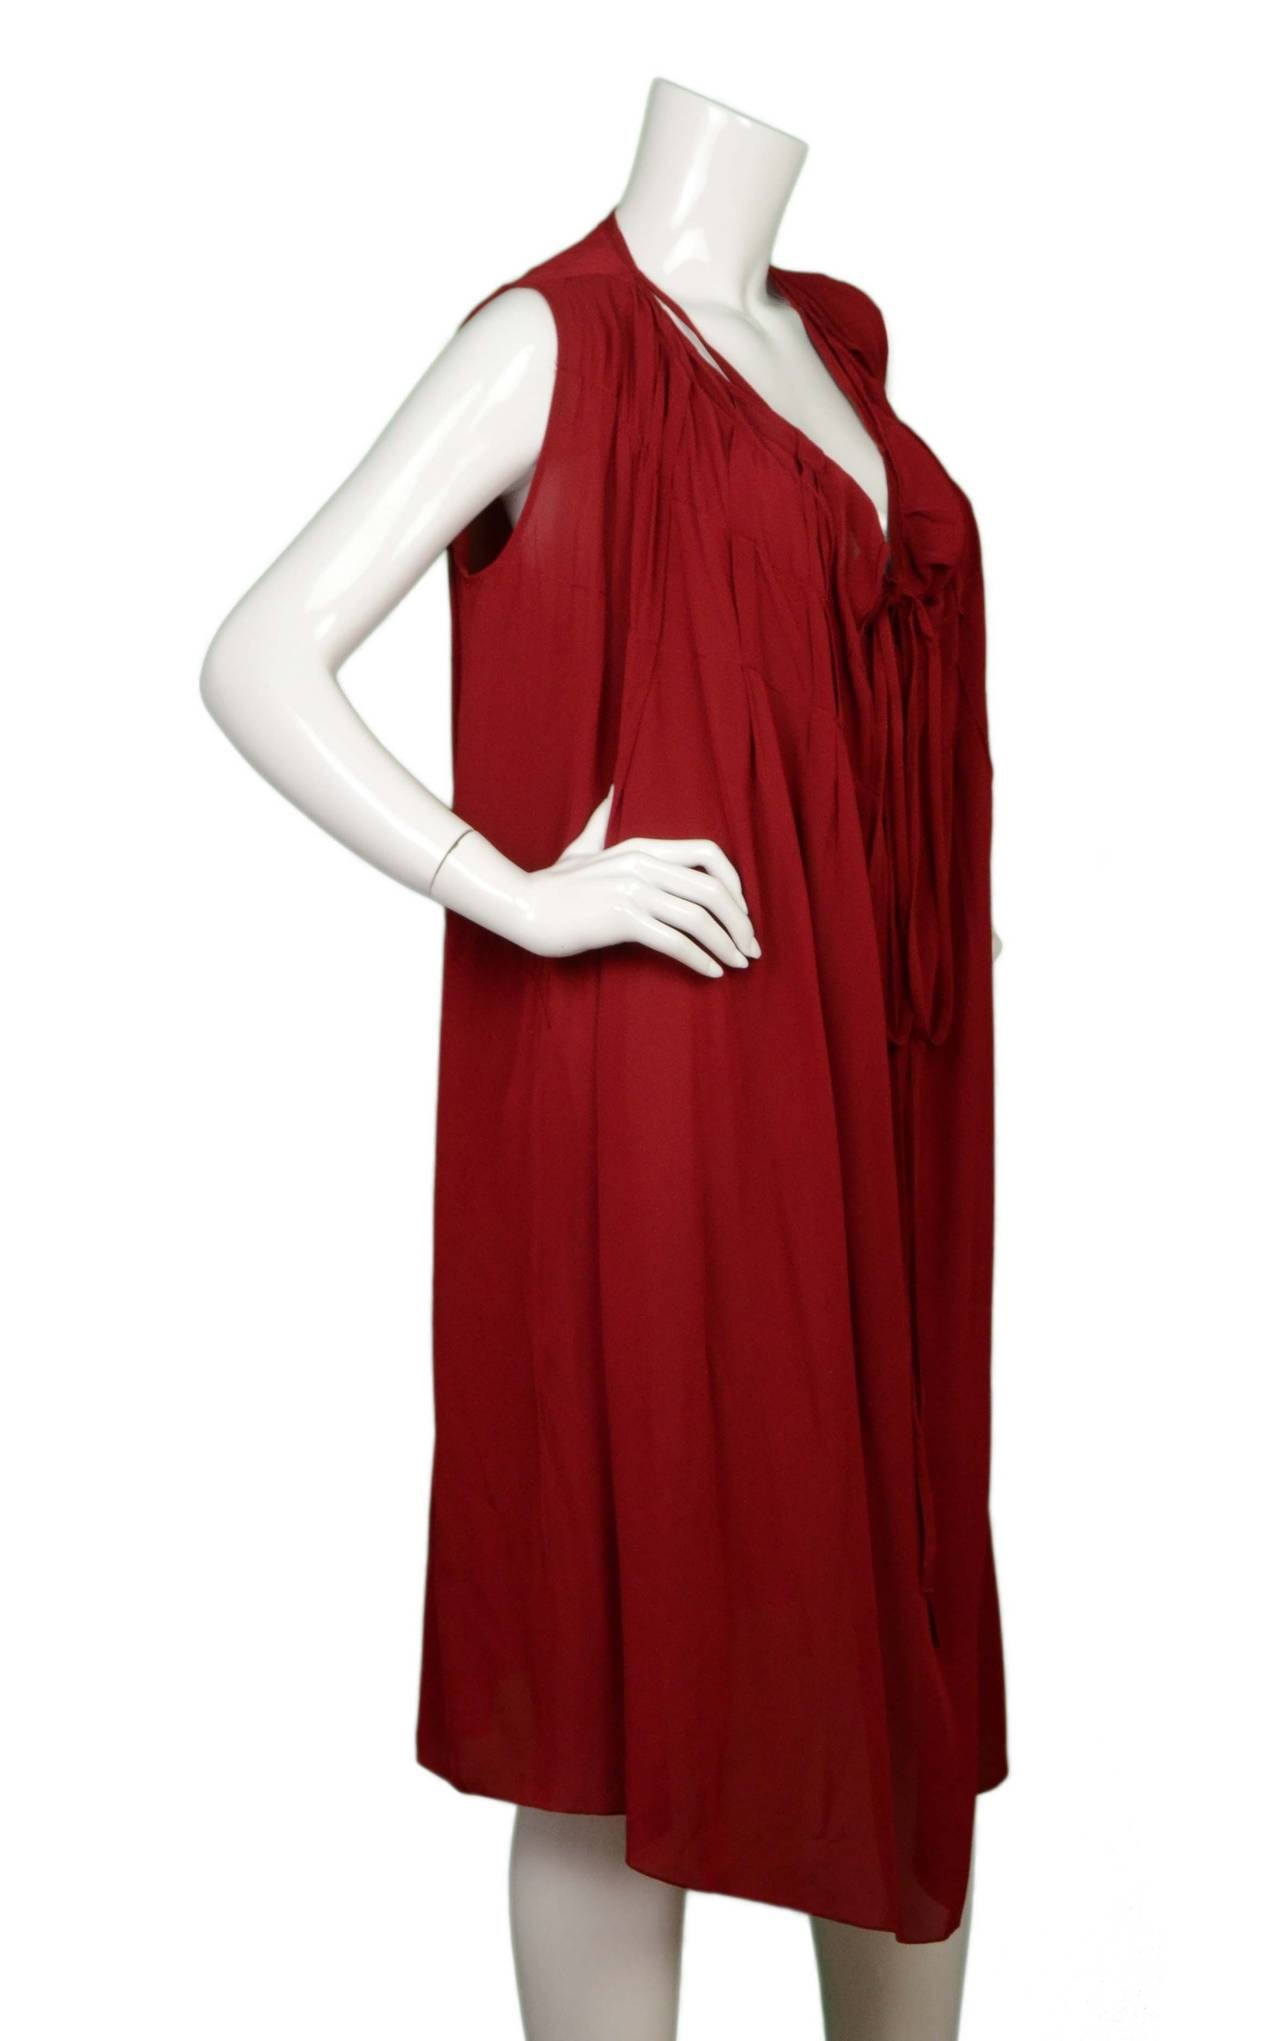 Marni Maroon Silk Sleeveless Sac Dress sz 38 For Sale at 1stdibs